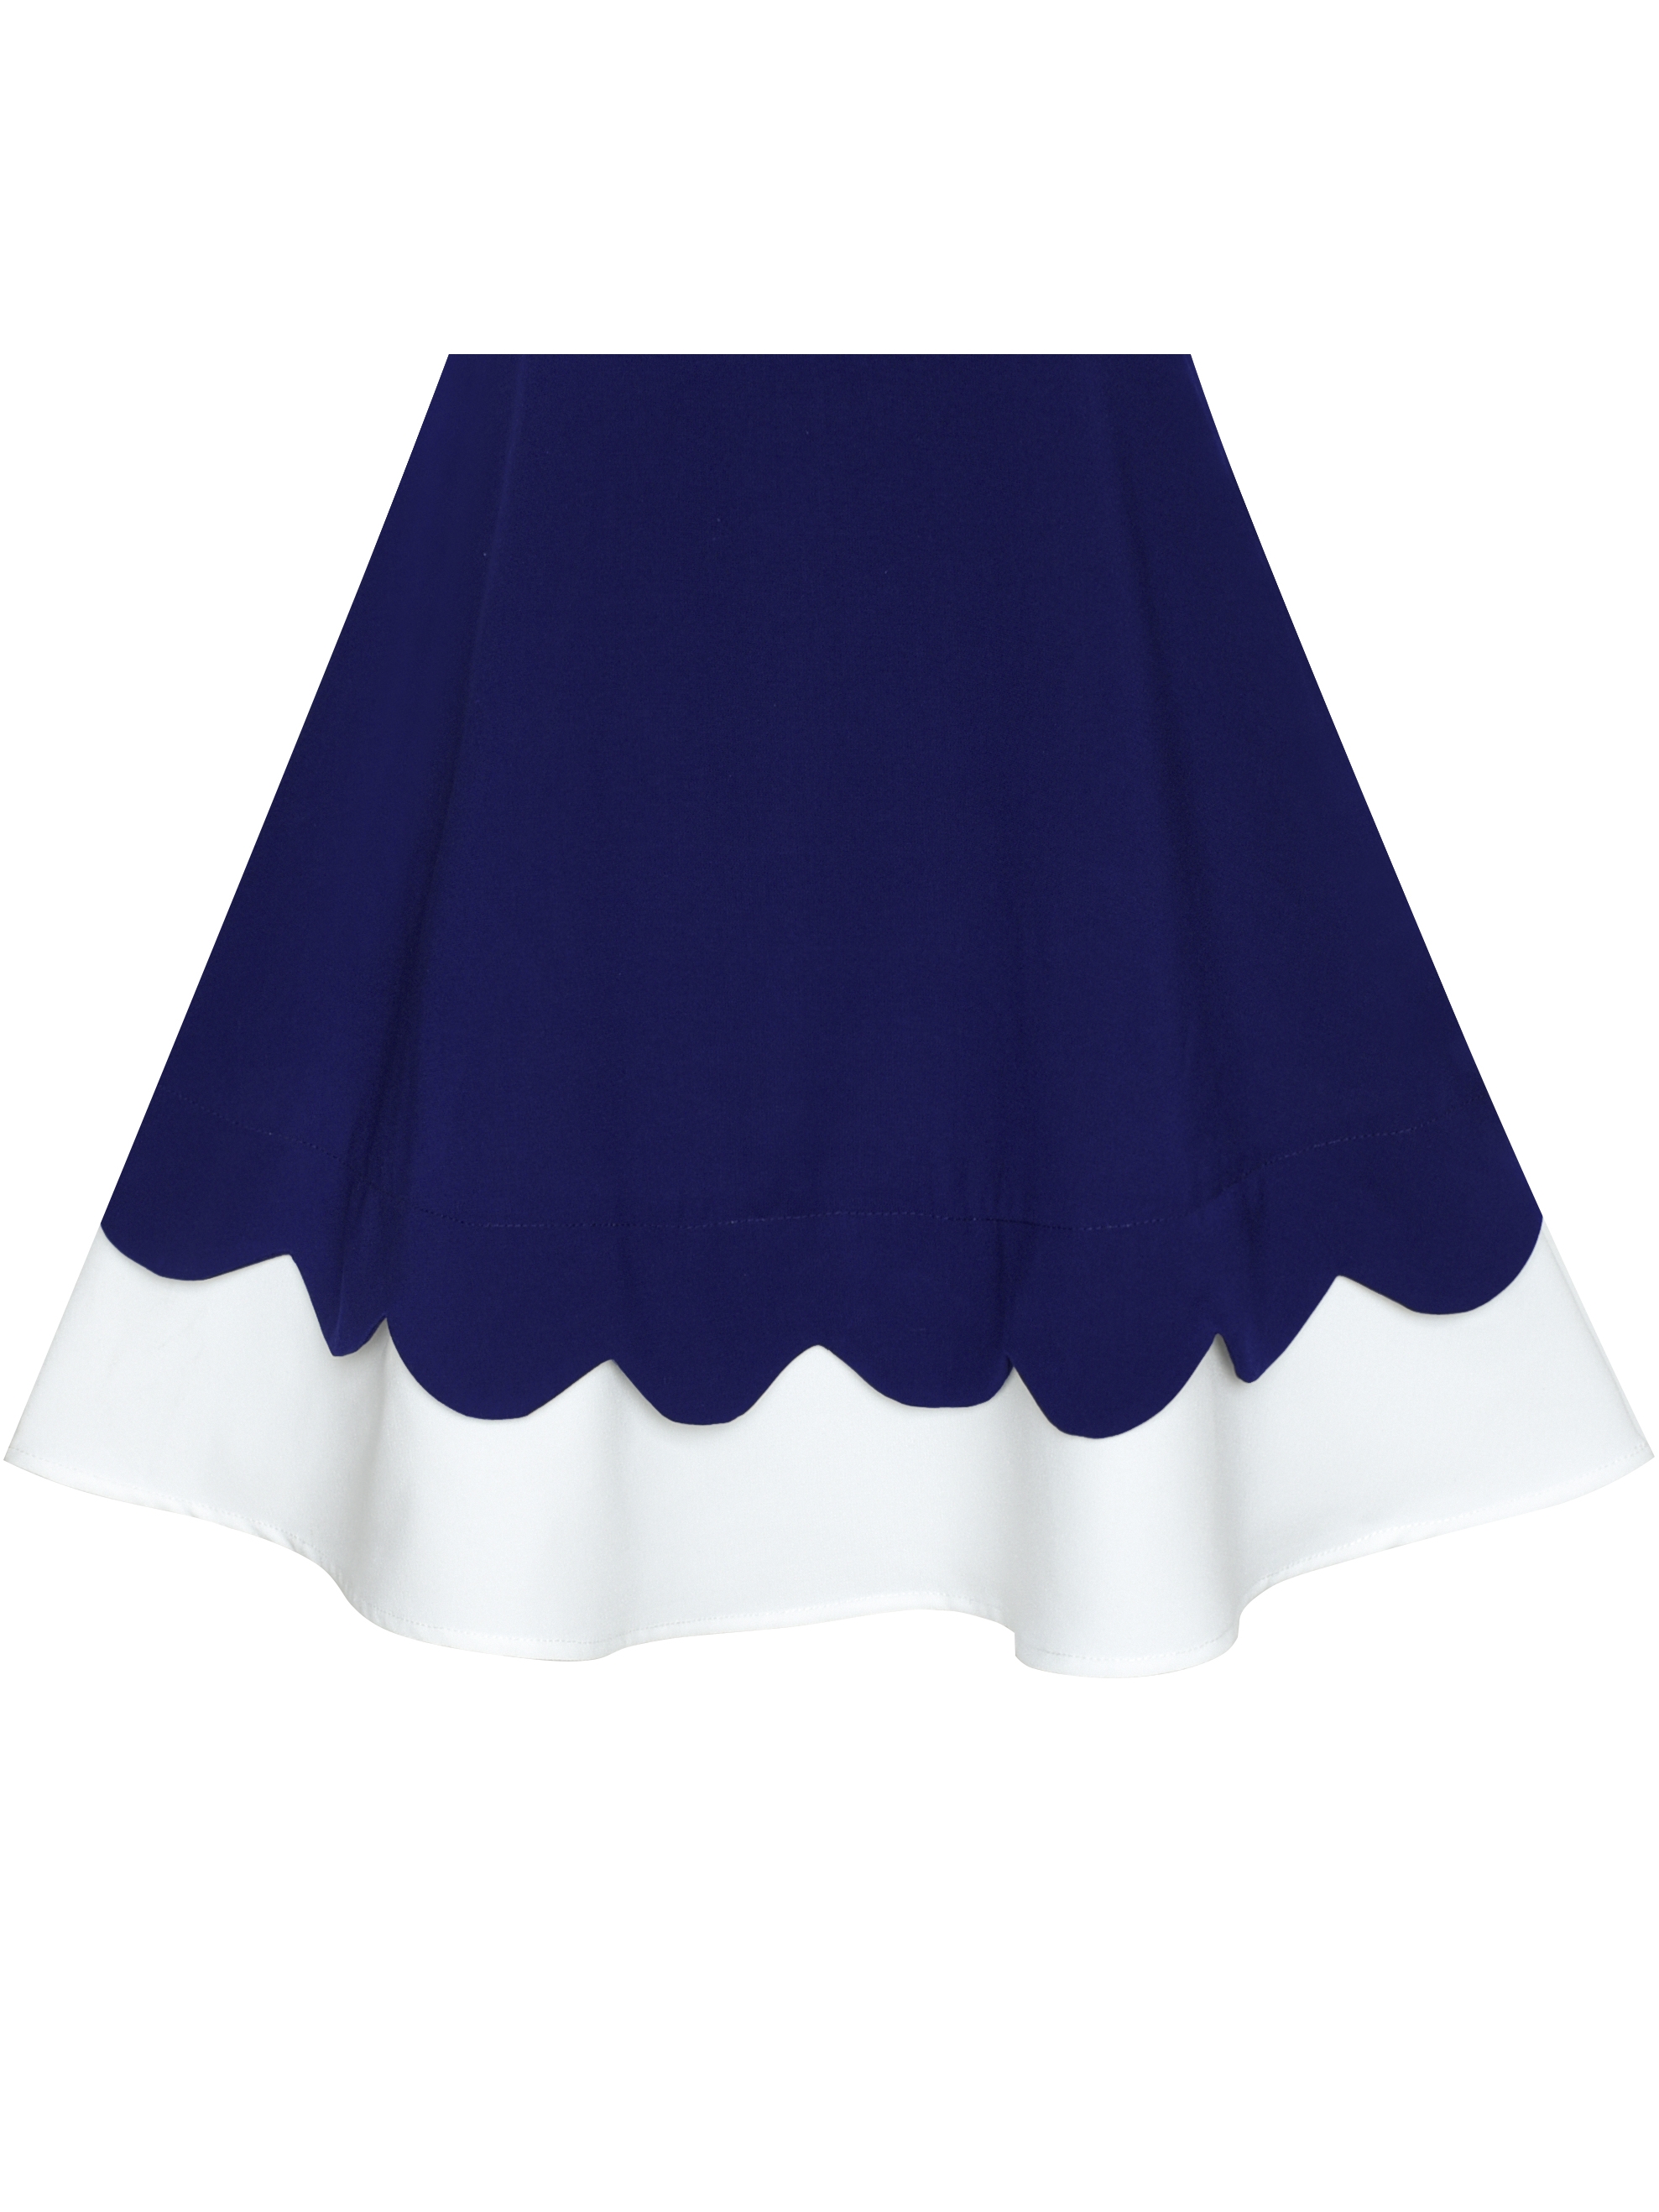 Girls Dress Back School Uniform Navy Blue White Collar Tie Short Sleeve 5 Years - image 5 of 6